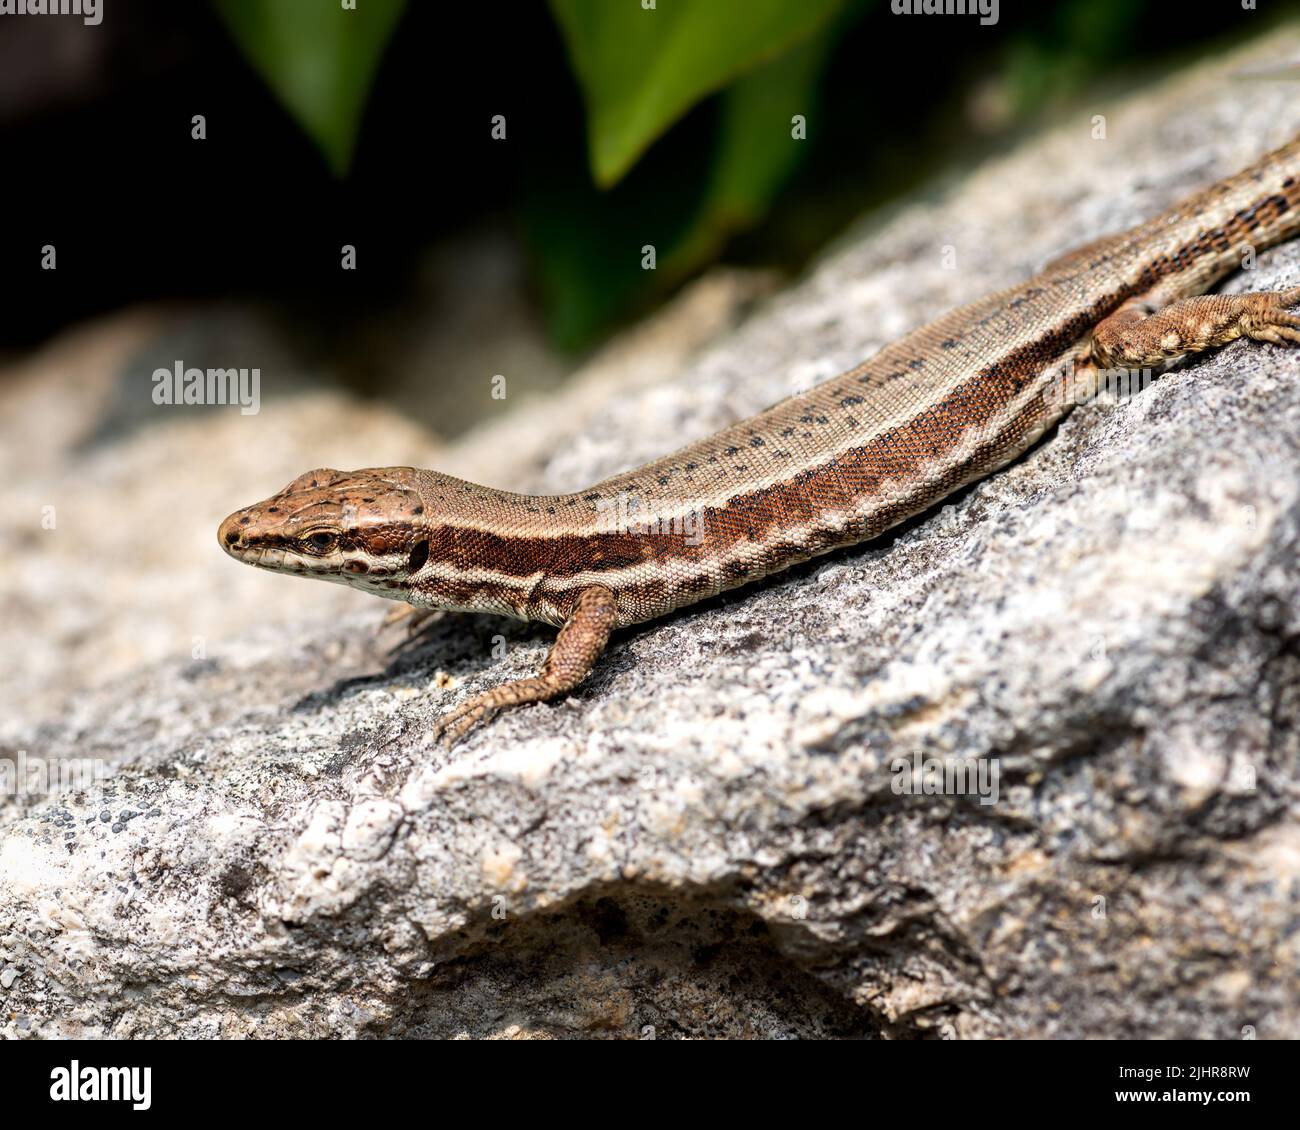 Gecko lizard watching at the camera, brown European lizard Stock Photo